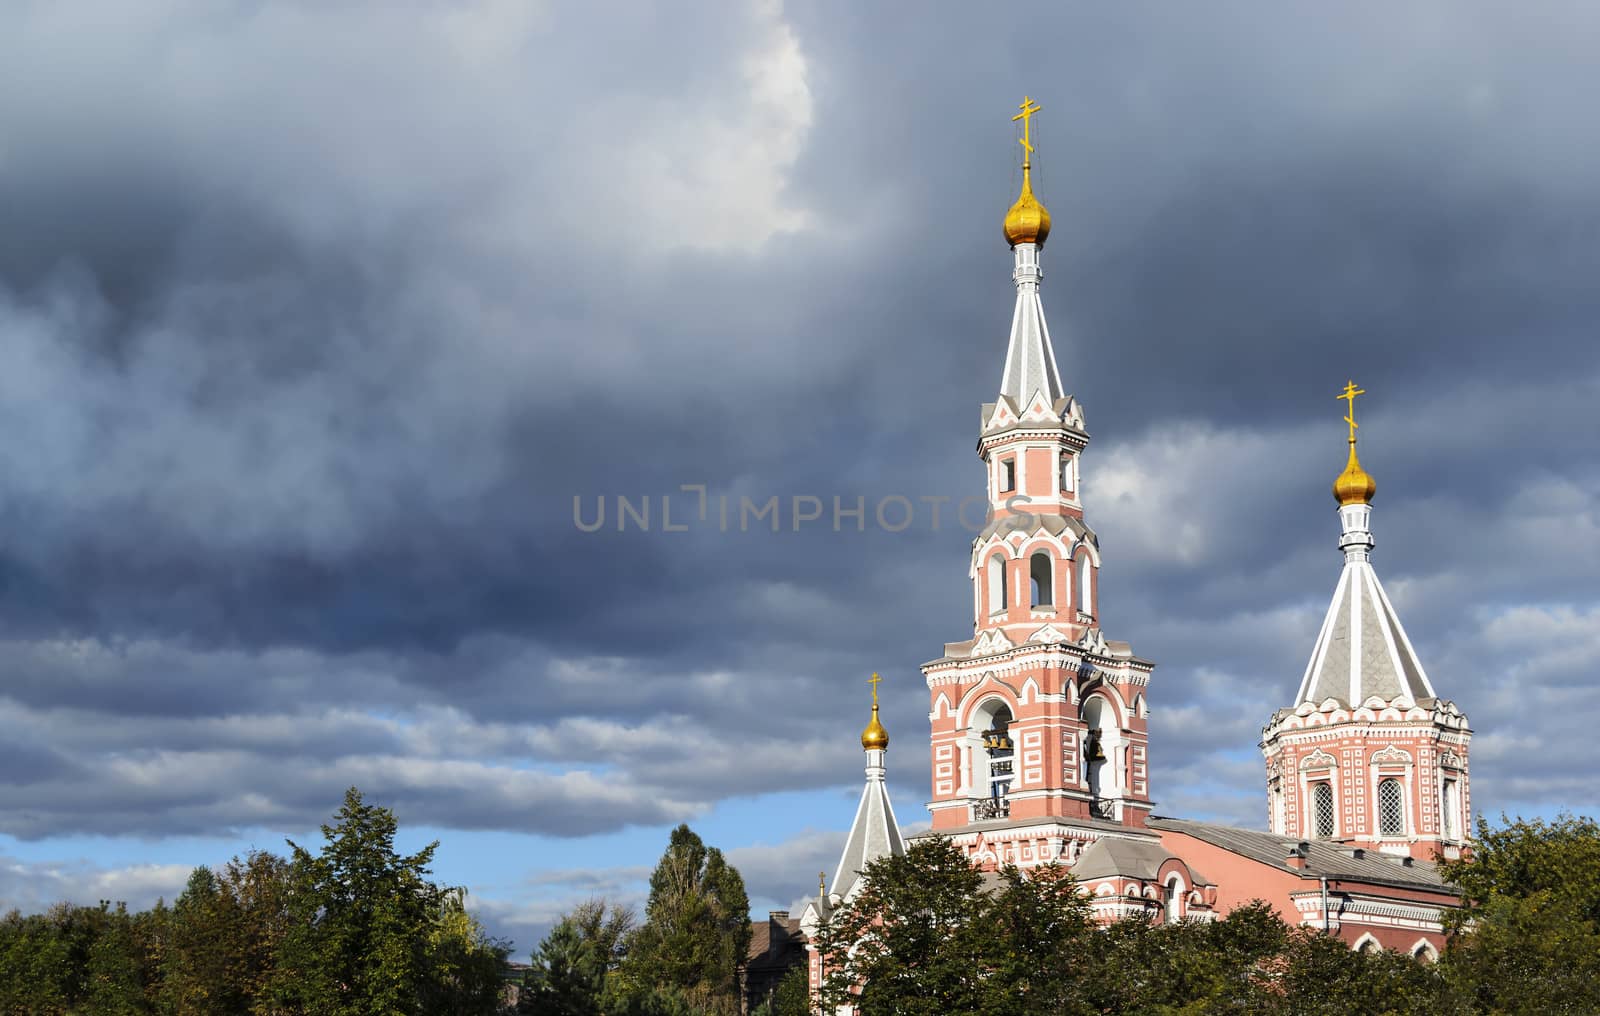 Christian church against the sky with dark clouds. Dniprodzerzhyns'k, Ukraine.